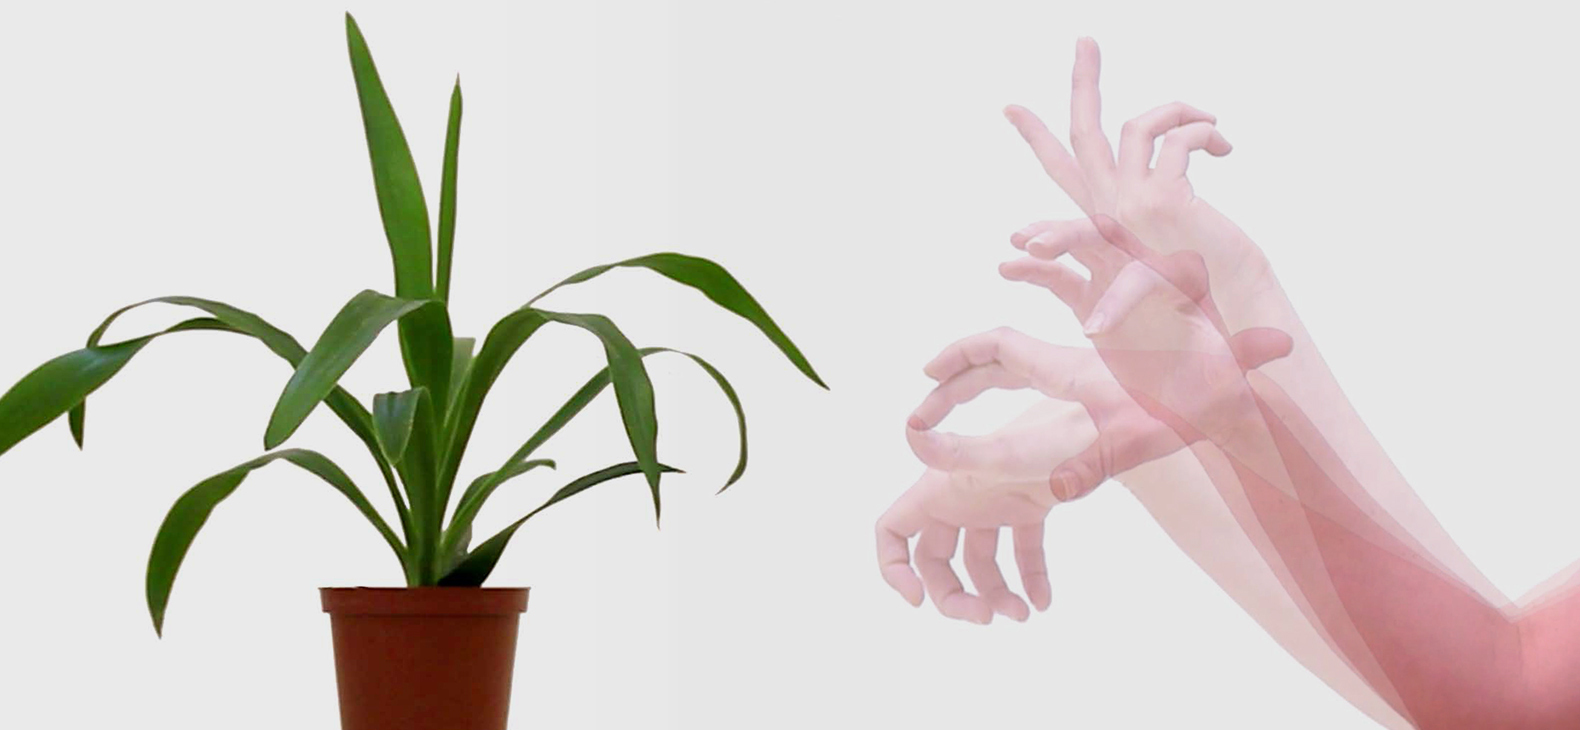 dreier asking a plant